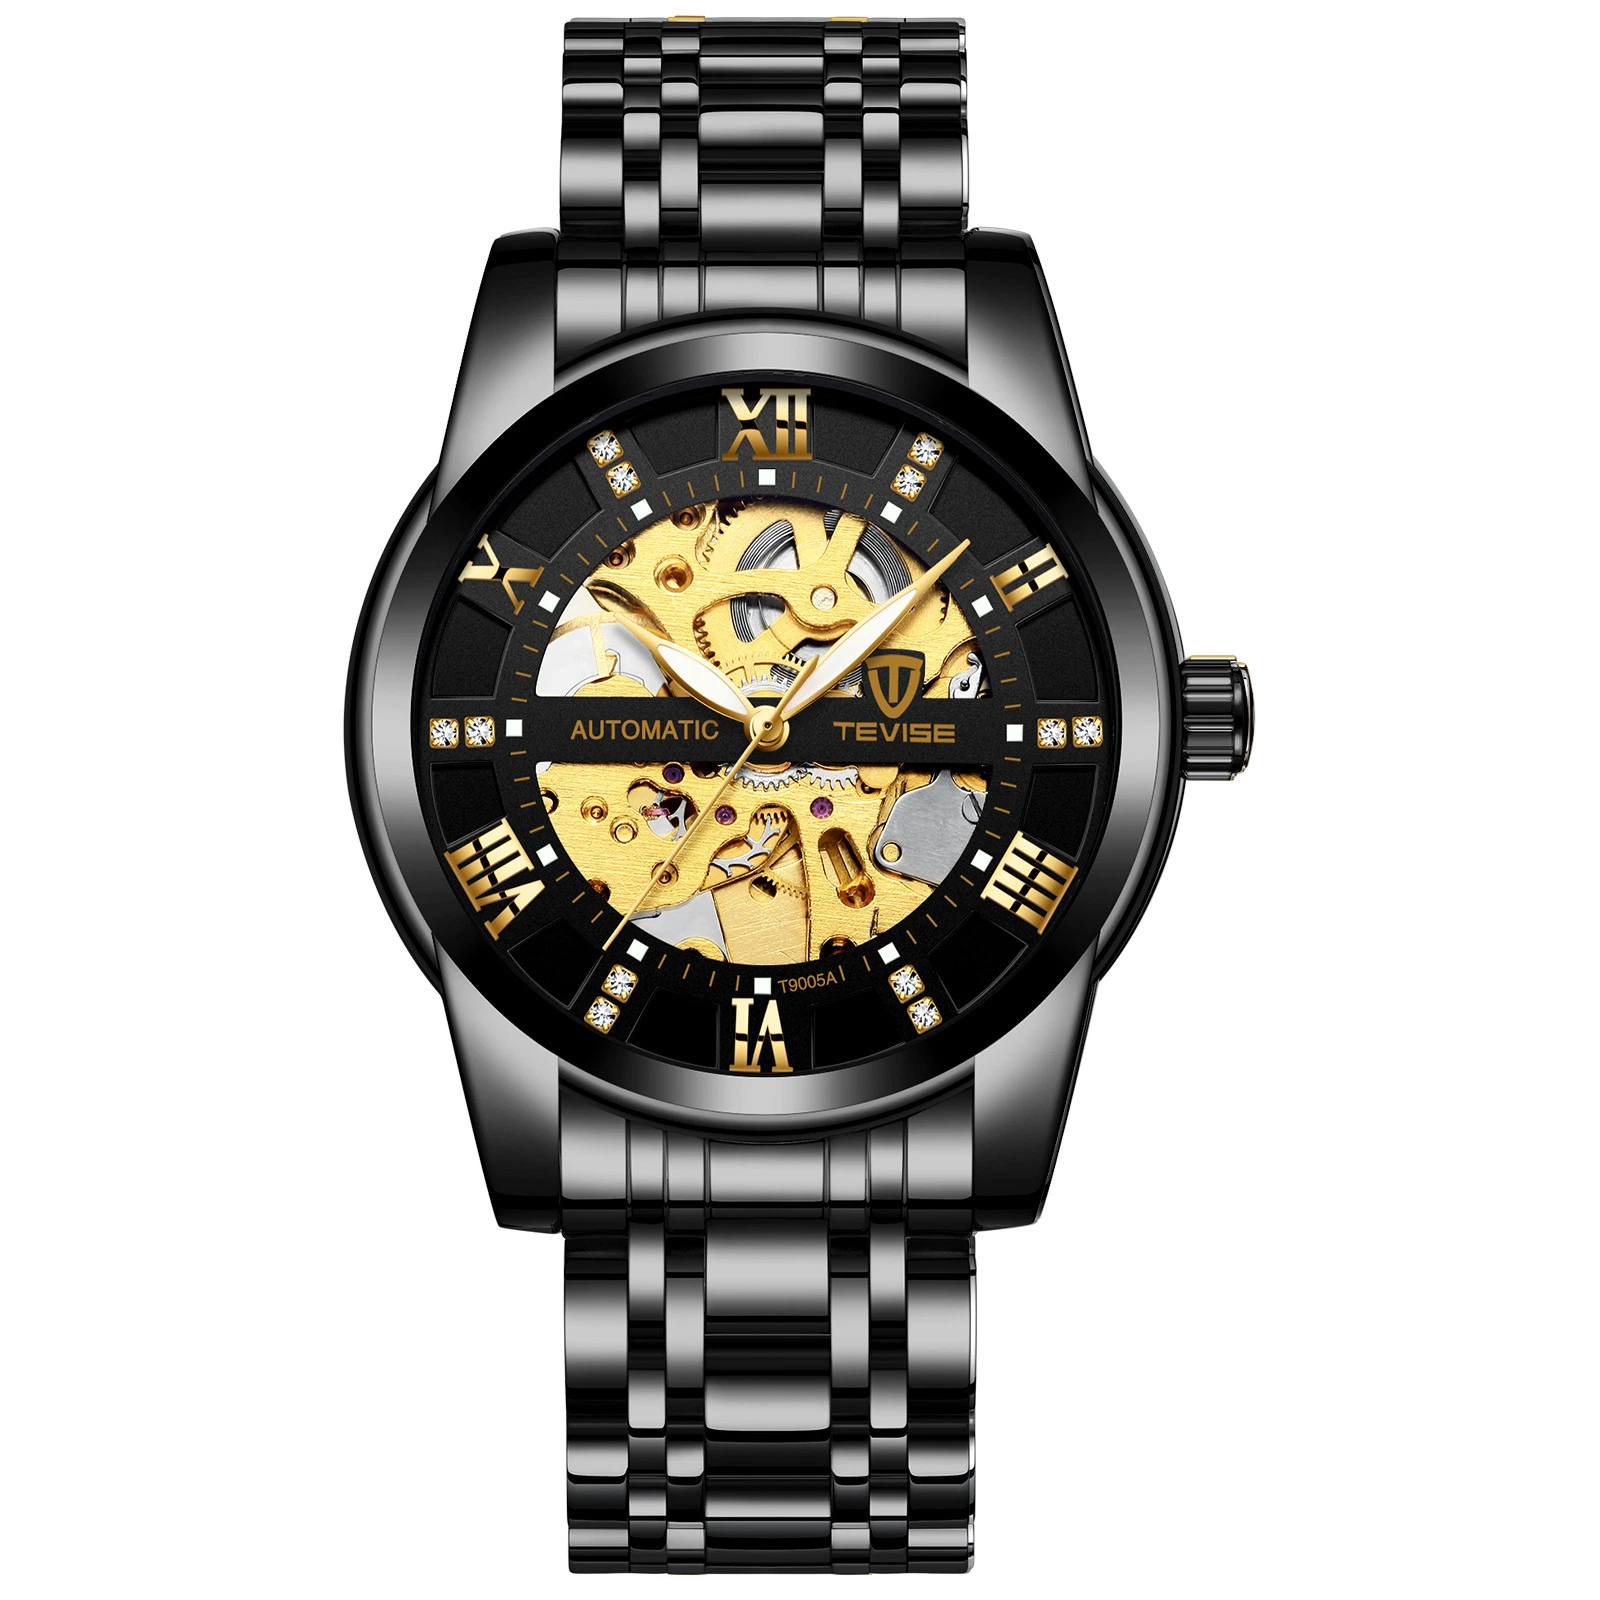 Moda Swiss Watch Acero inoxidable banda Suiza Reloj relojes mecánicos